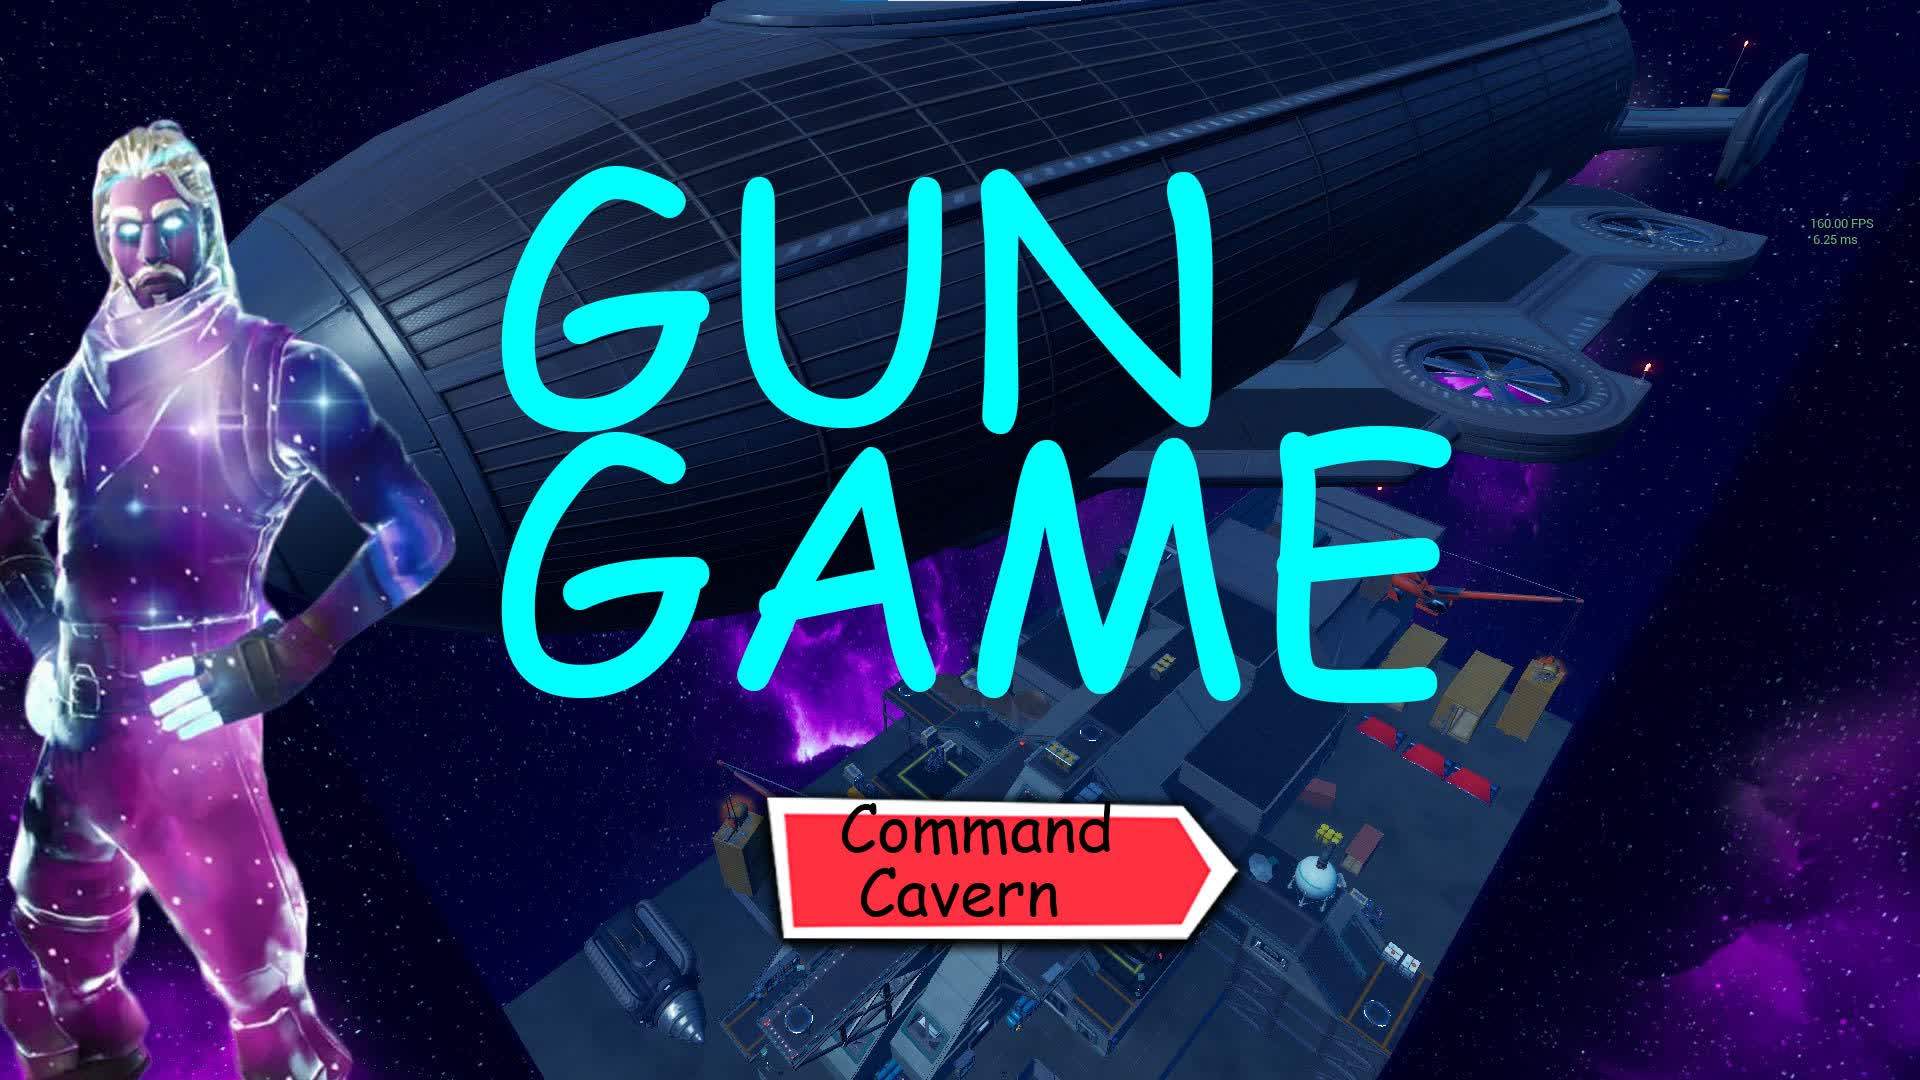 🌇 COMMAND COVERN GUN GAME 🌇